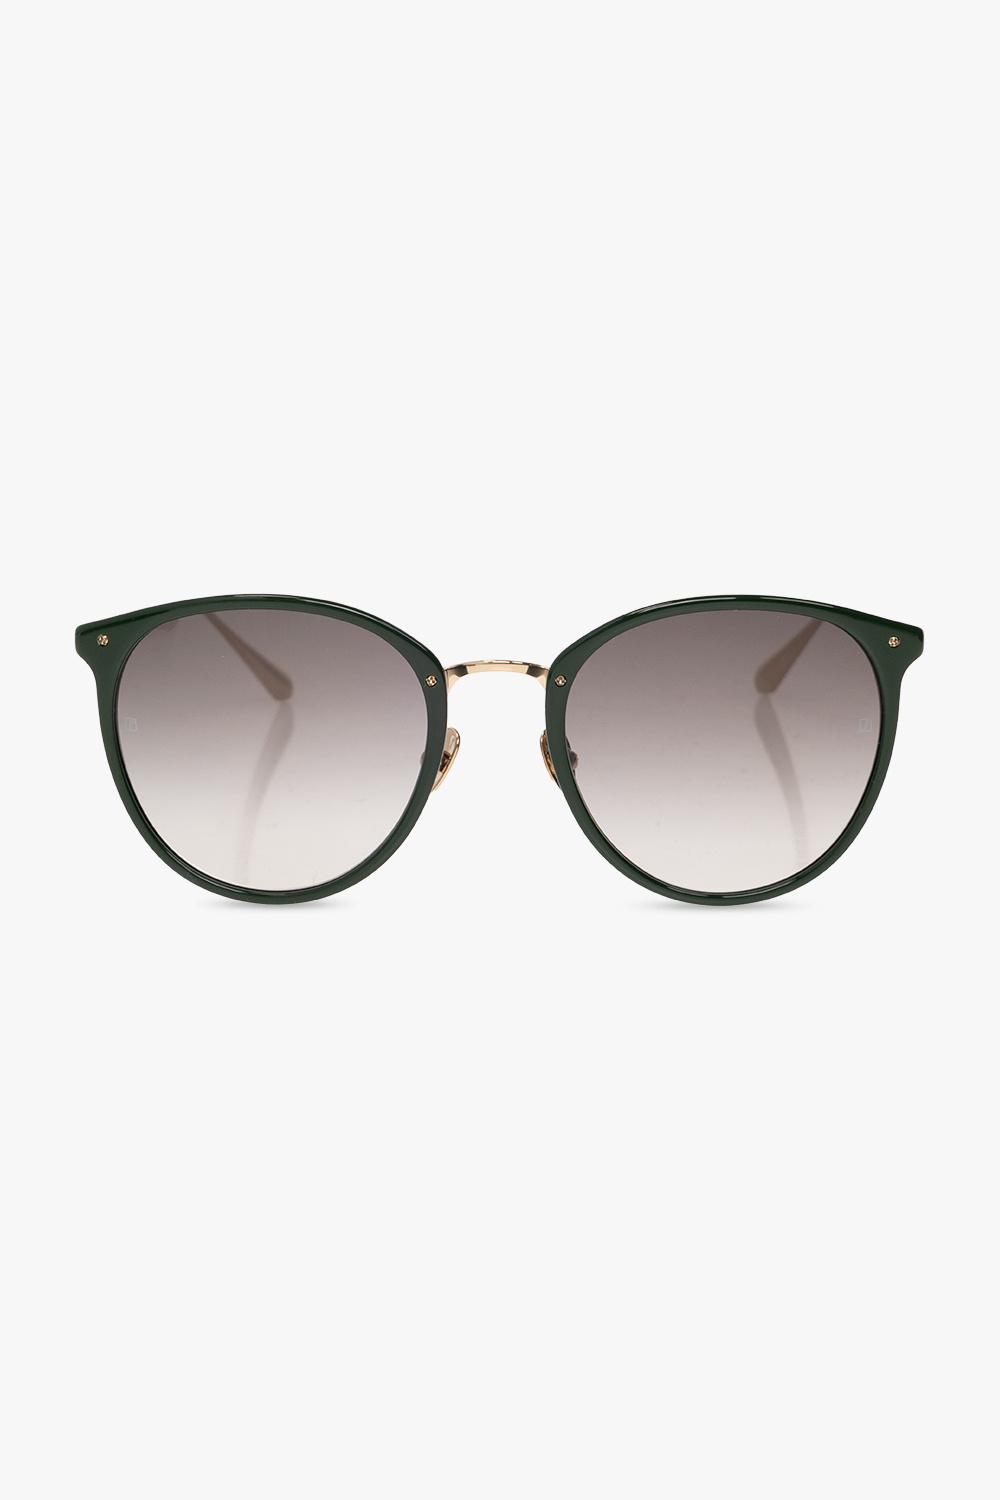 Linda Farrow ‘Calthorpe’ sunglasses